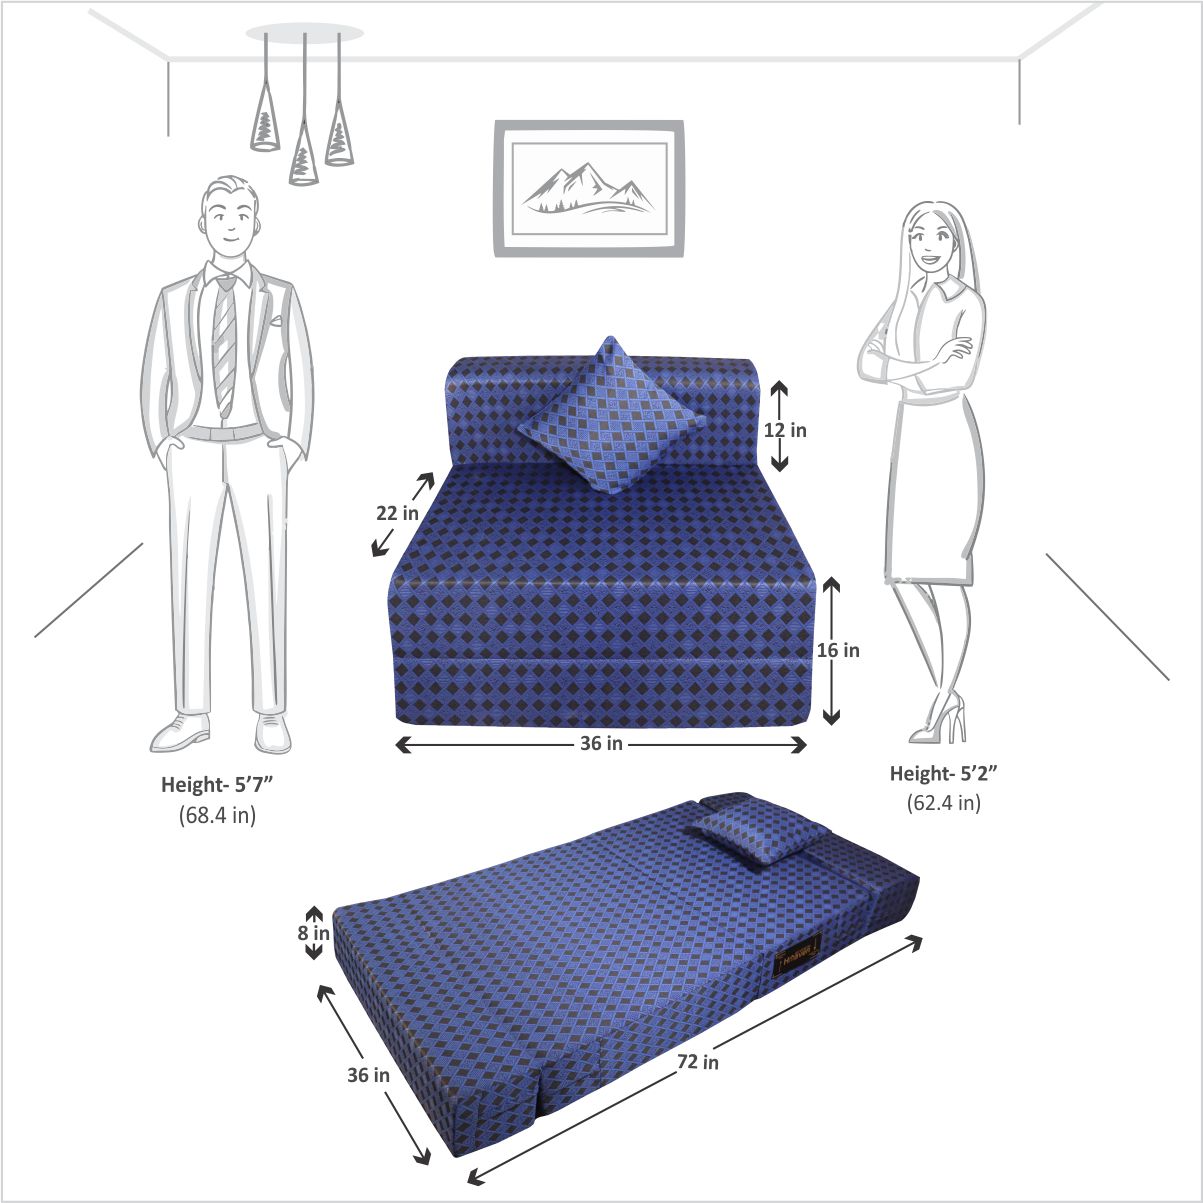 Blue & Black 6×3 Sofa cum Bed with 1 Cushion